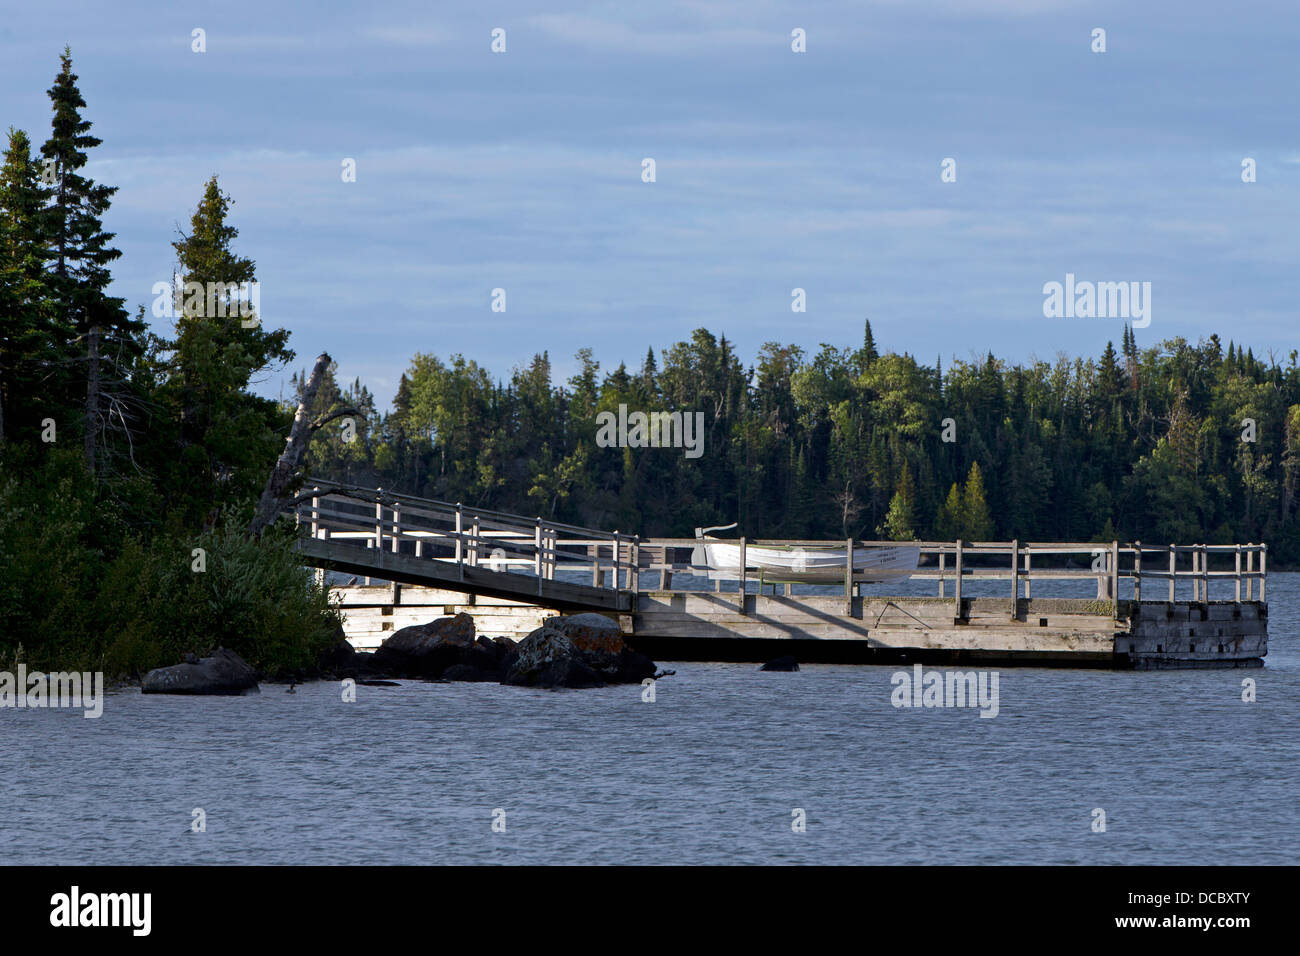 America Dock, Rock Harbor, Isle Royale National Park, Michigan, United States of America Stock Photo